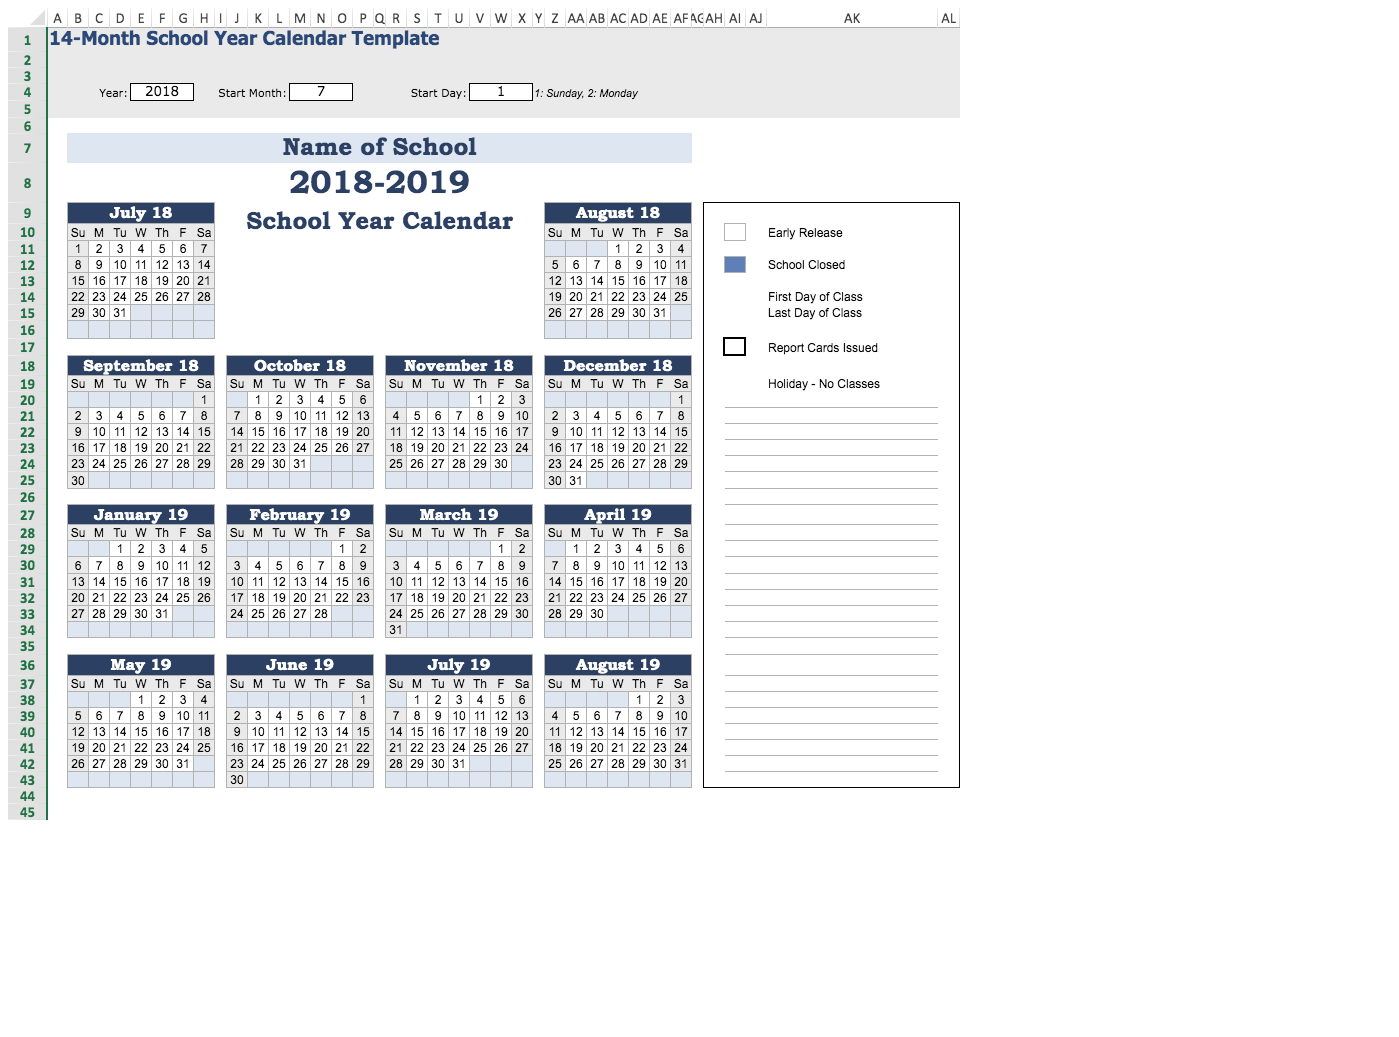 14-Month School Year Calendar Template | Visual Paradigm Tabular